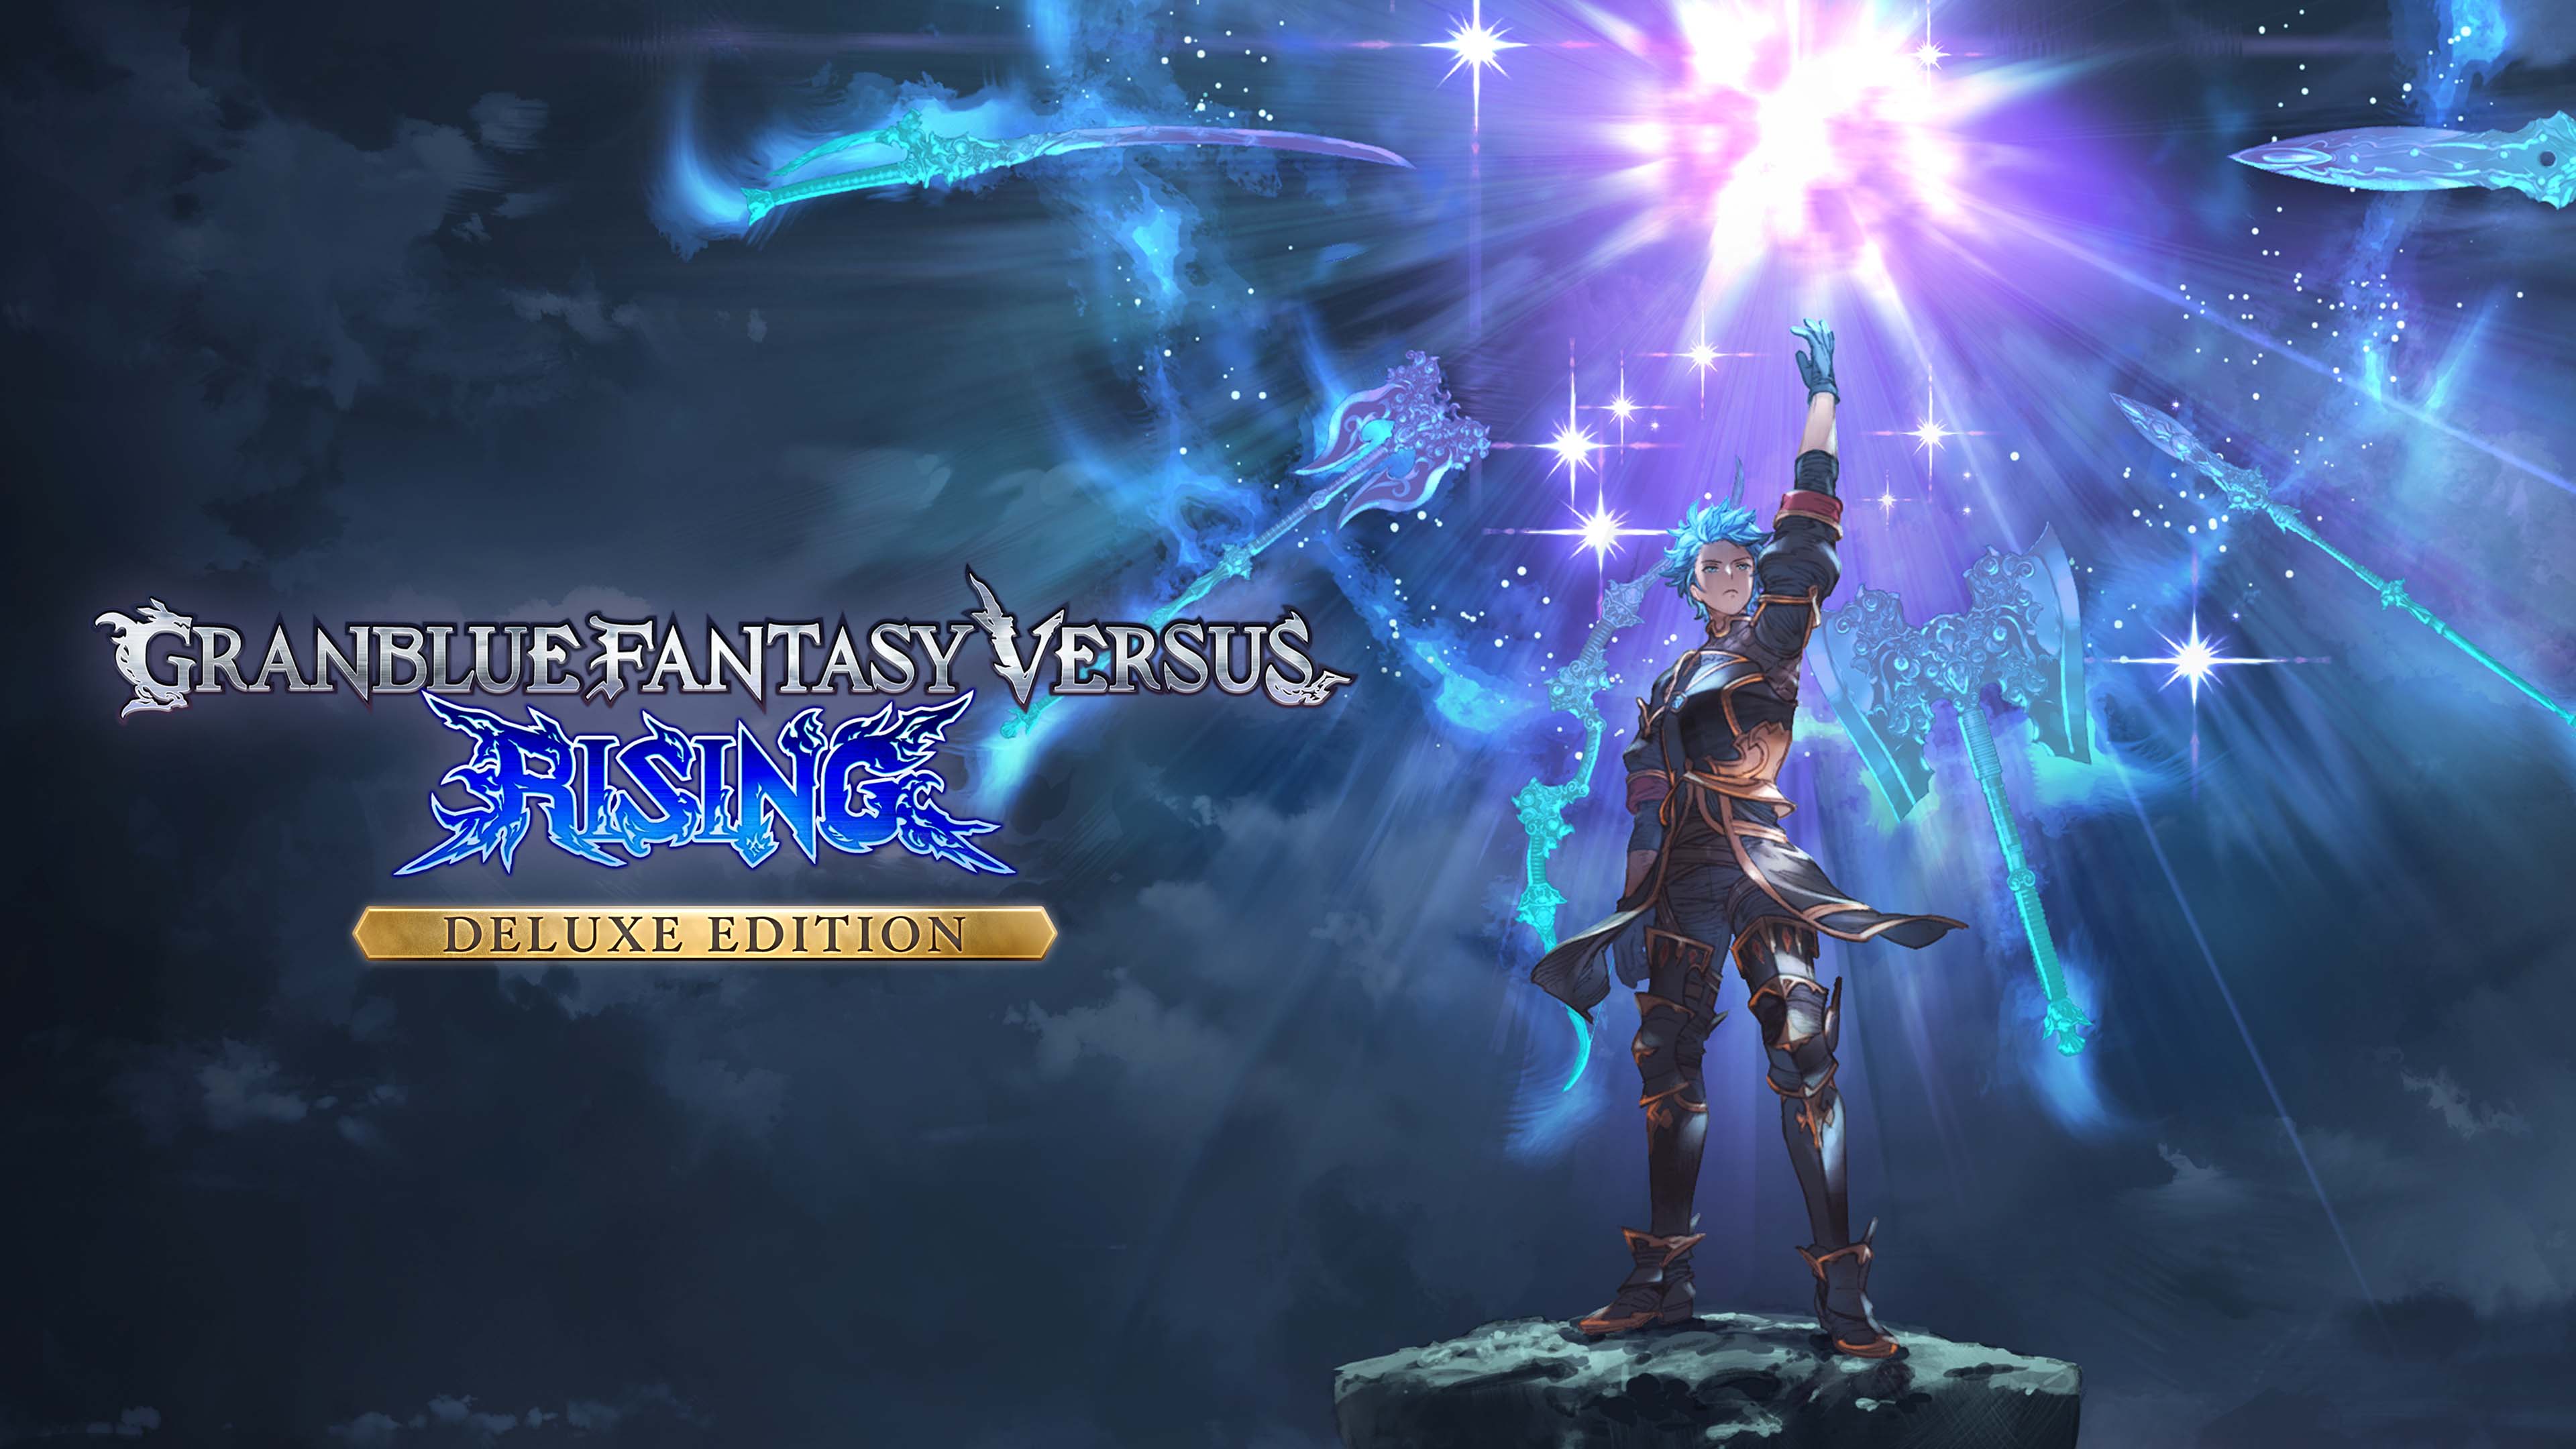 Granblue Fantasy: Versus Rising – Nier Announced as Third New Character